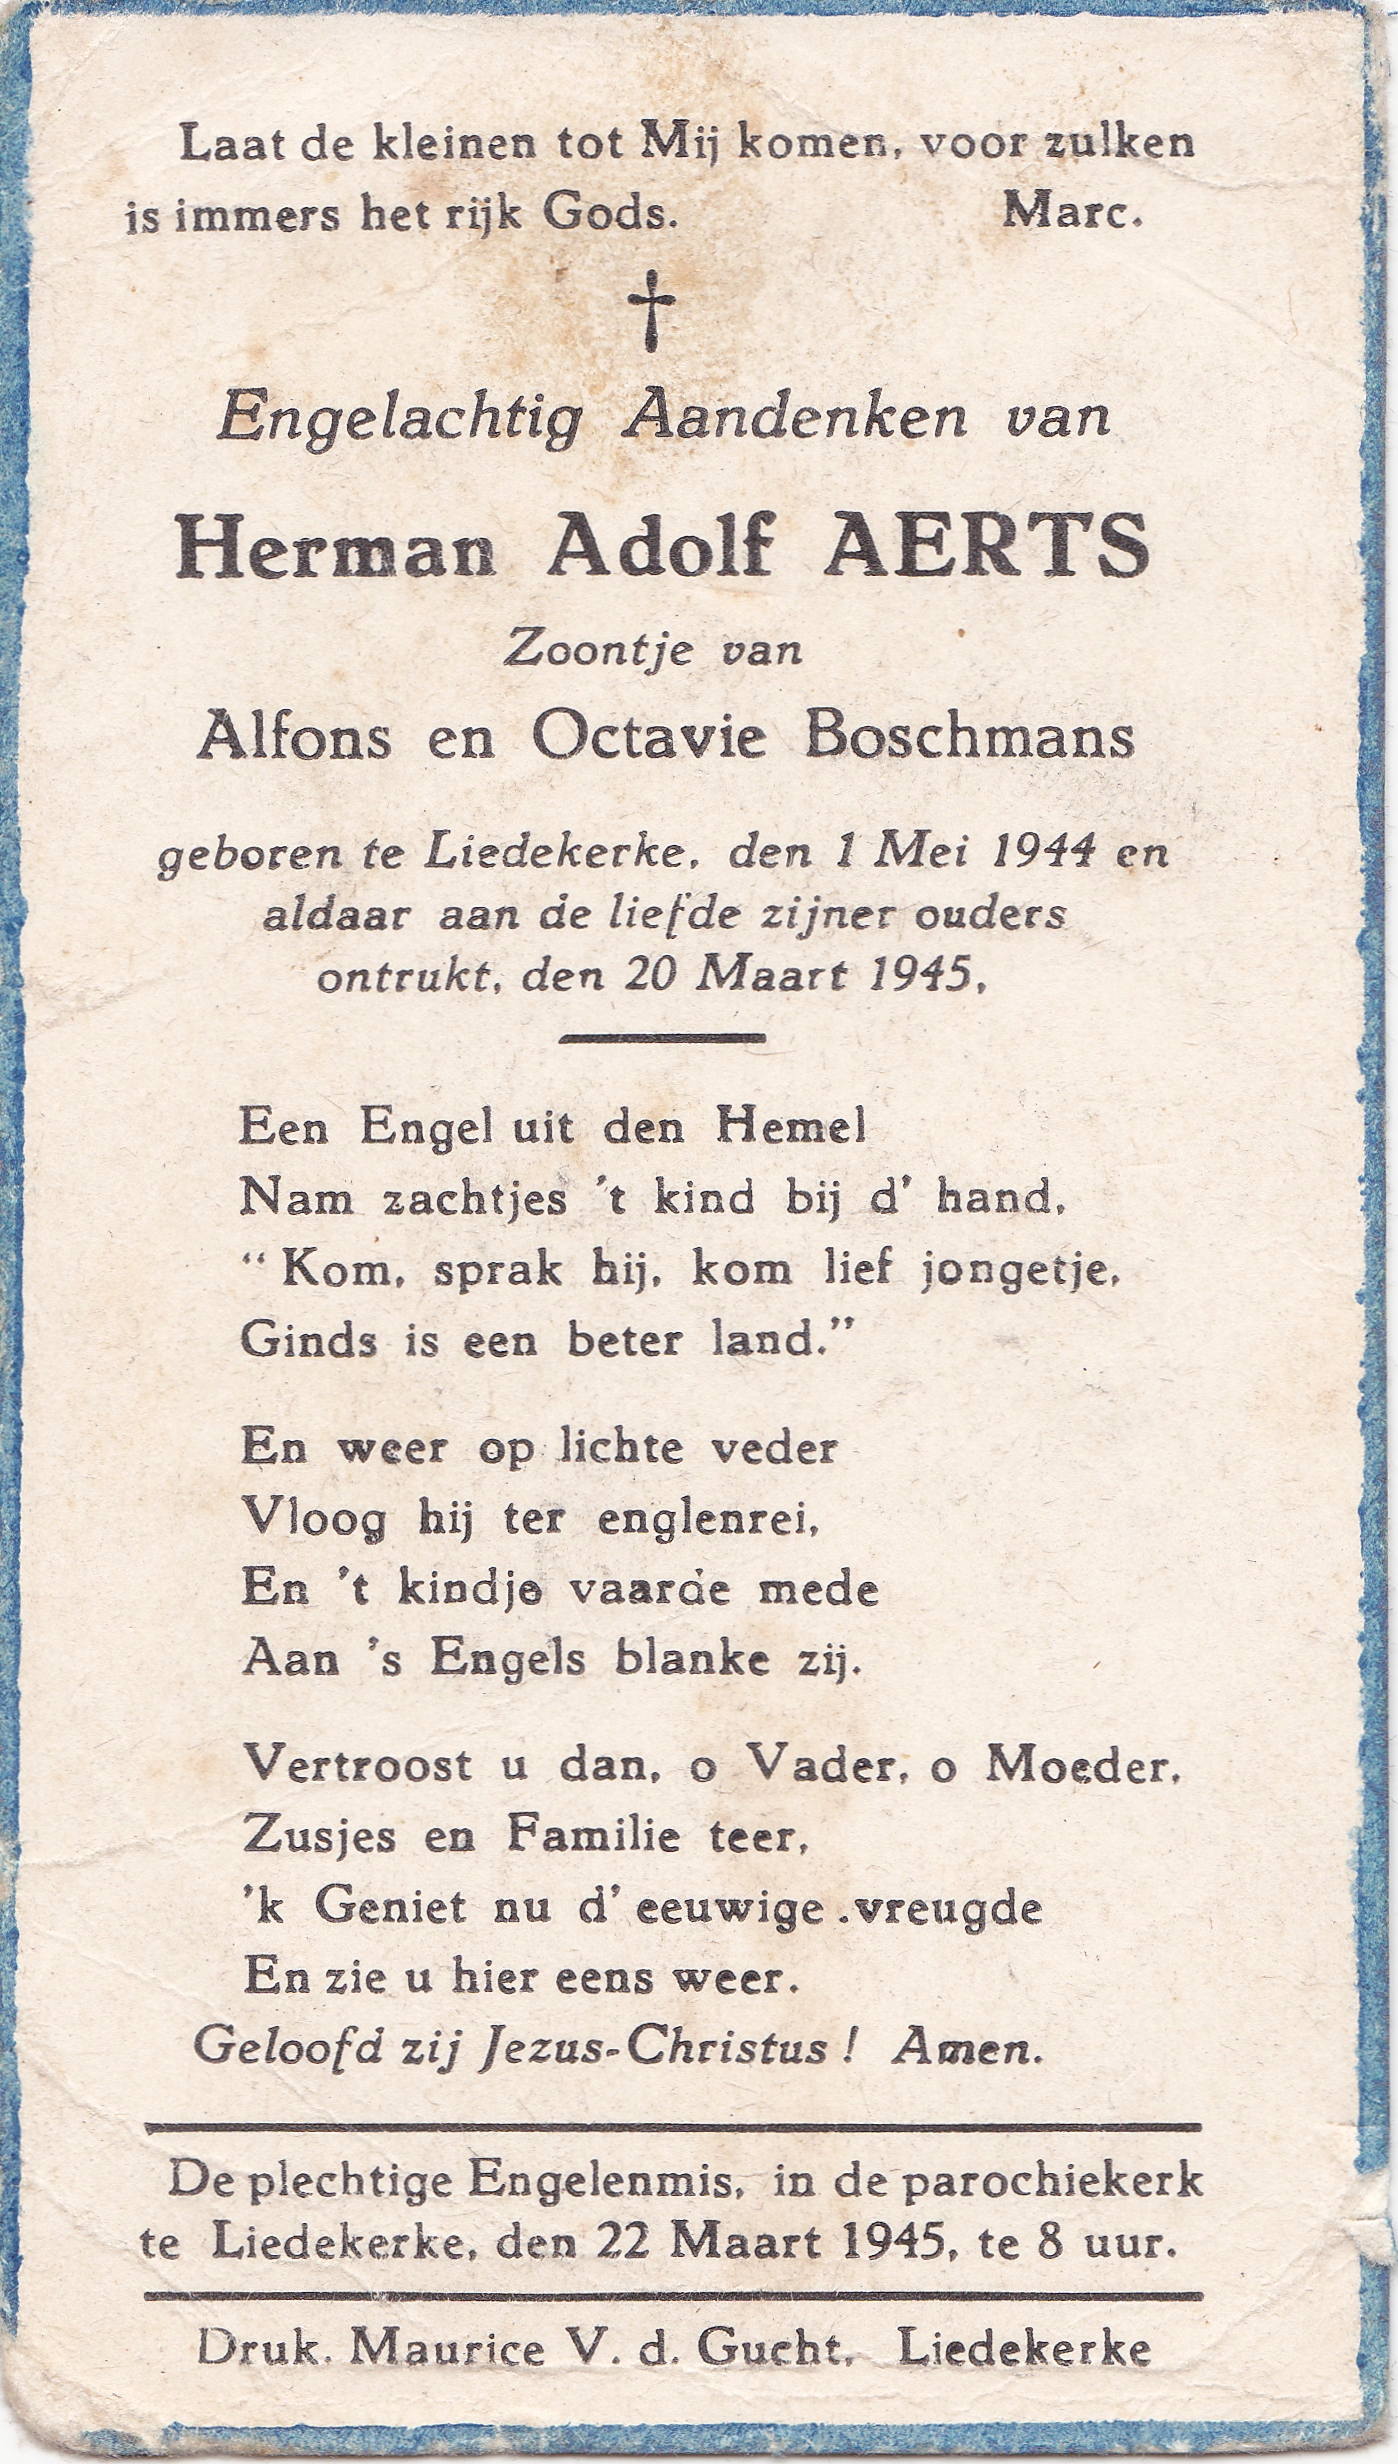 Aerts Adolf Herman